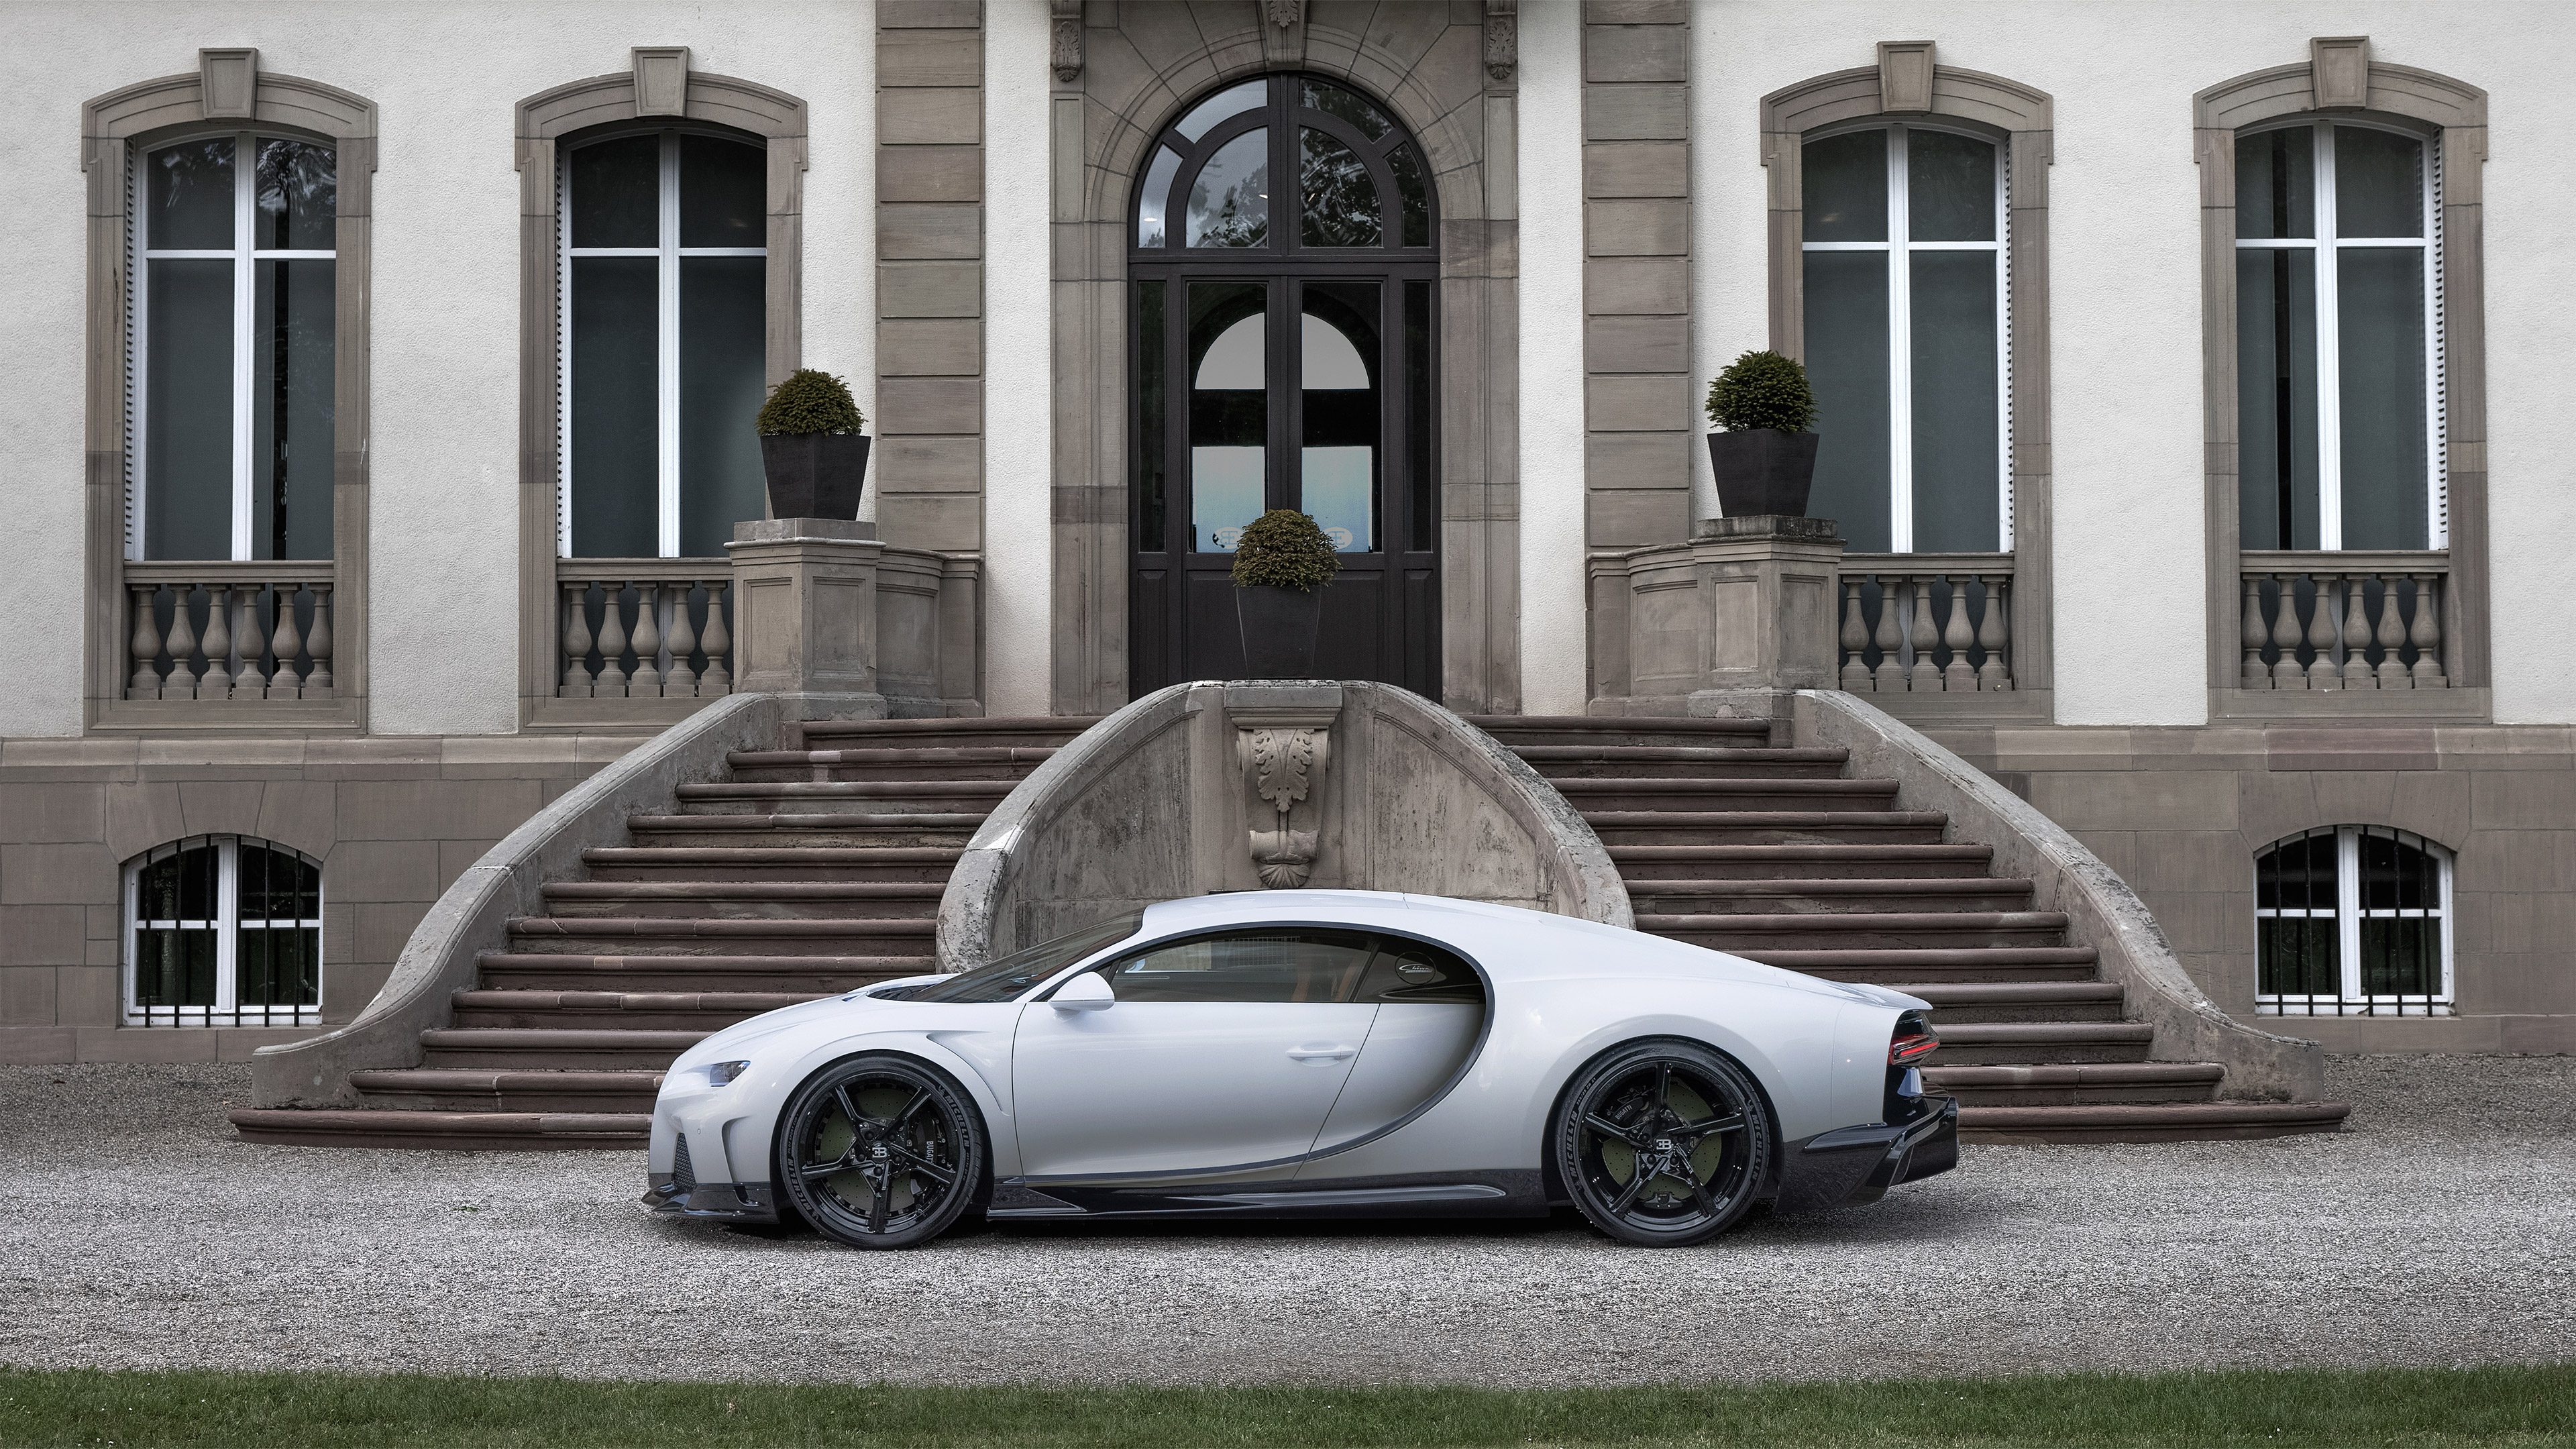 Baixe gratuitamente a imagem Bugatti, Carro, Super Carro, Bugatti Chiron, Veículos, Carro Prateado, Bugatti Chiron Super Sport na área de trabalho do seu PC